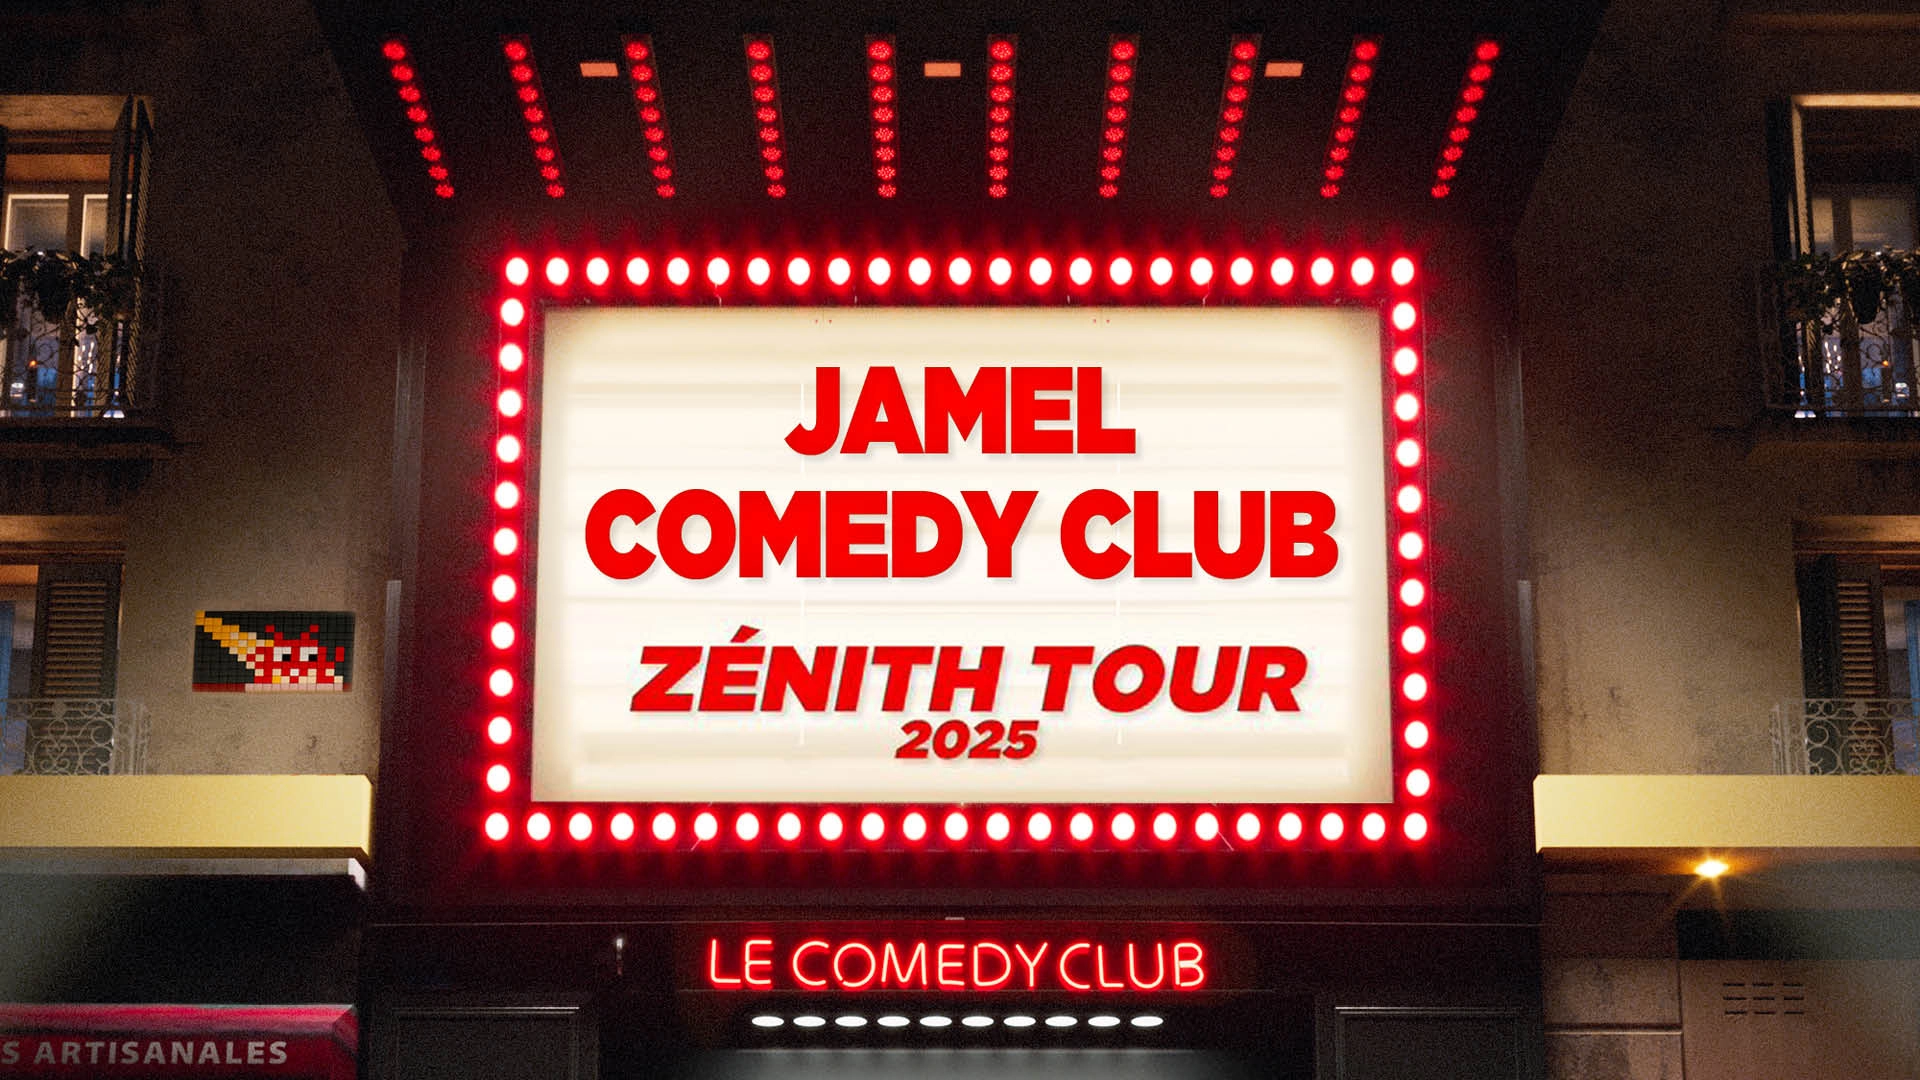 Jamel Comedy Club Zenith Tour at Zenith Nantes Tickets